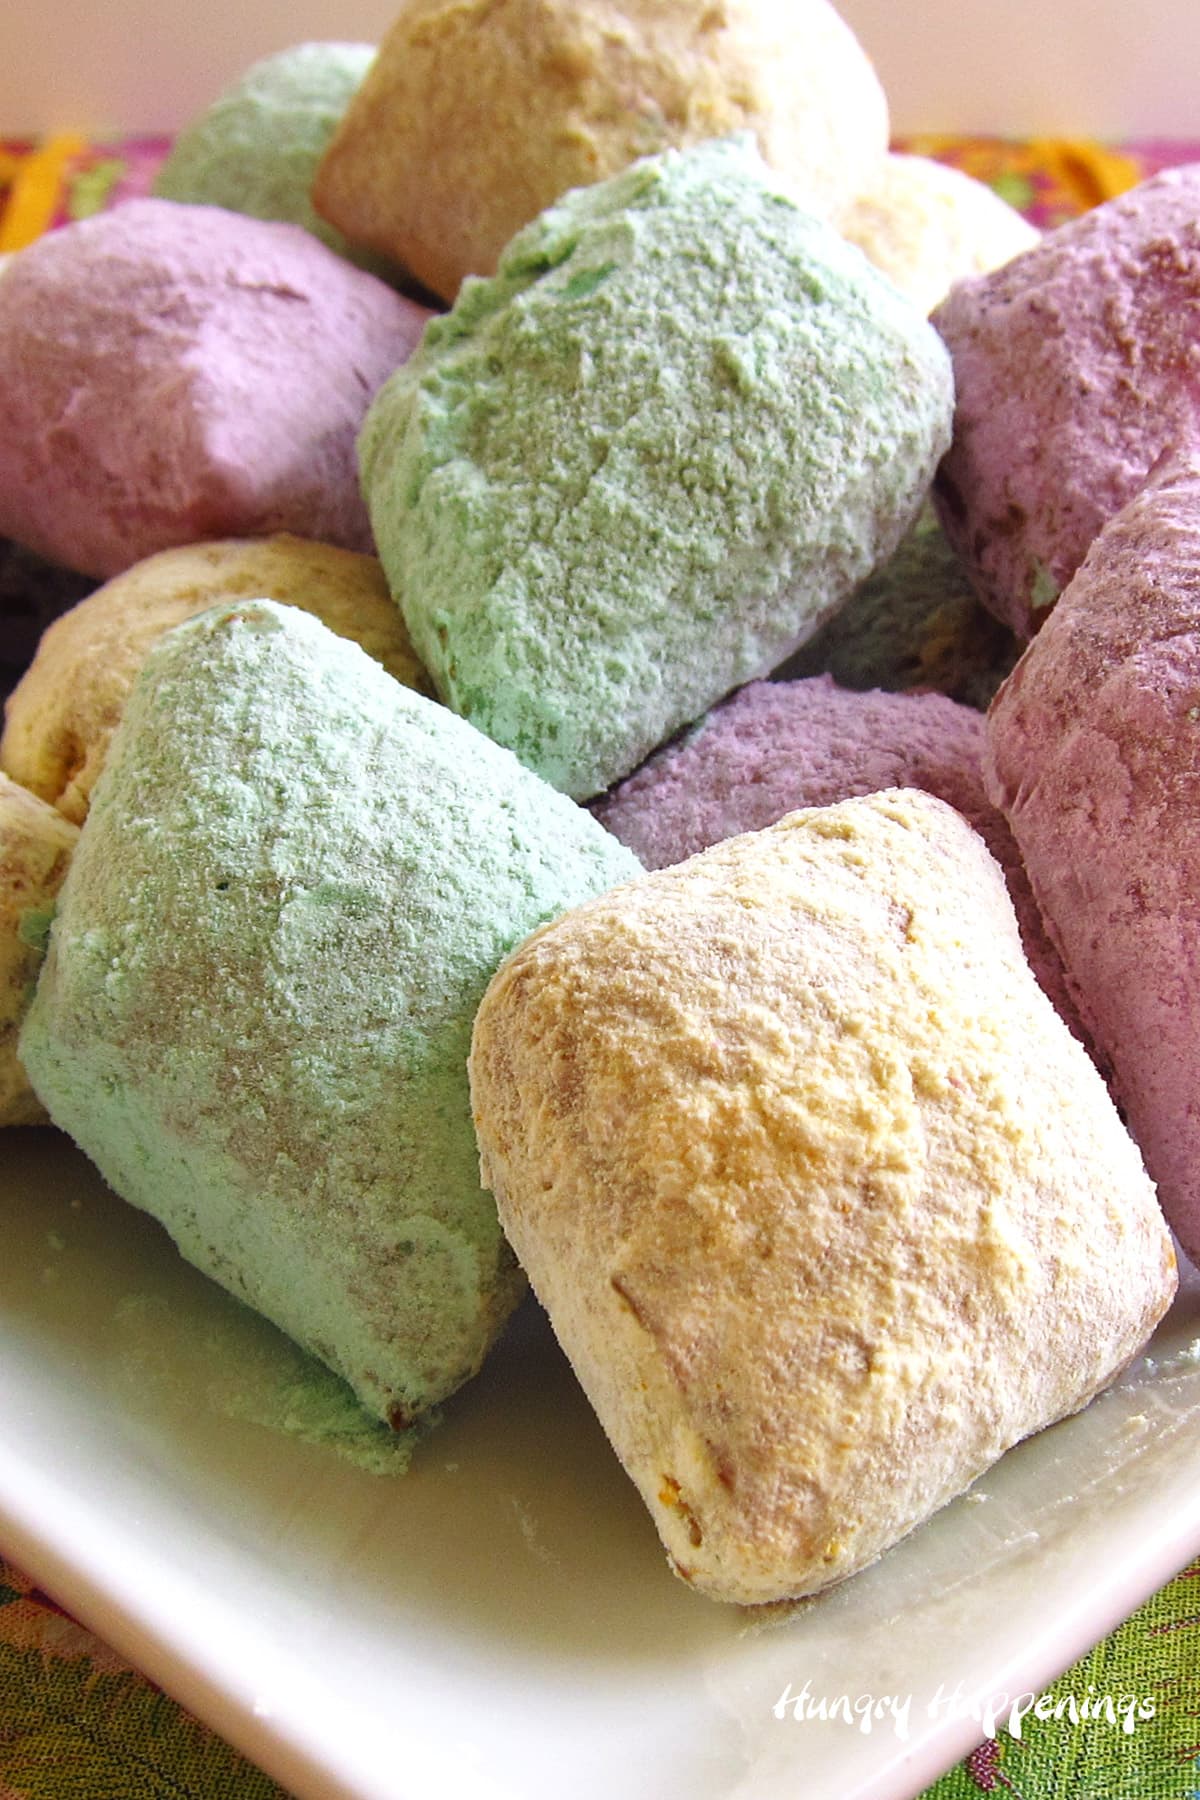 Mardi Gras dessert - diamon-shaped beignets dusted in colorful powdered sugar